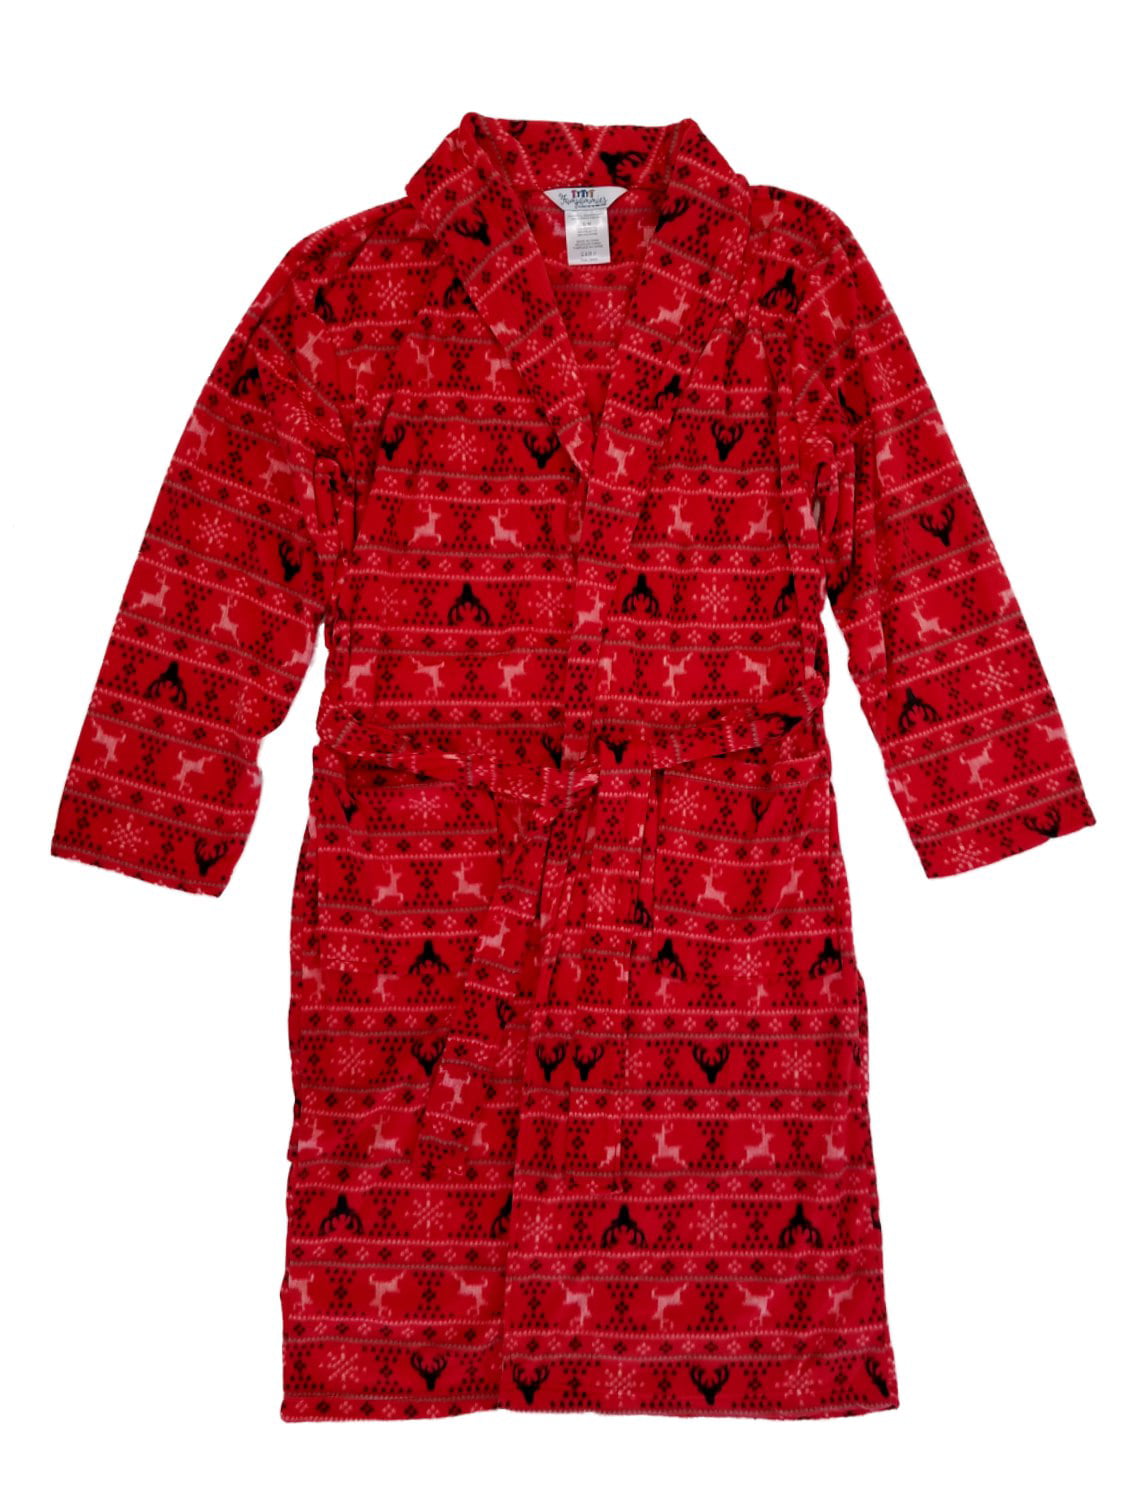 L/XL & 2XL NWT-Mens Holiday Christmas Red Reindeer Fairisle Plush Robe-size S/M 